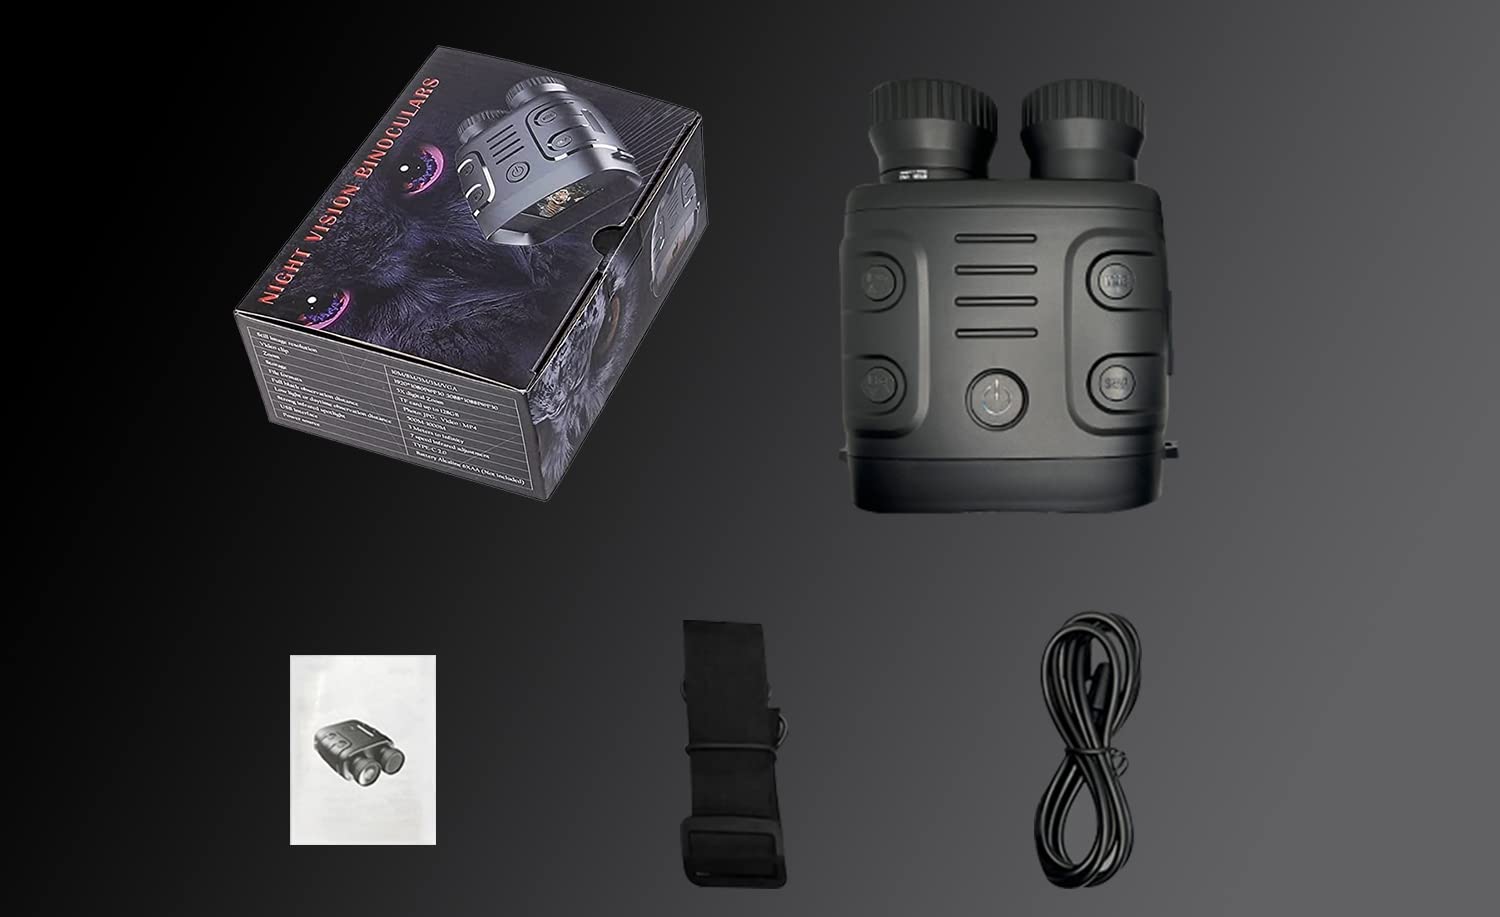 Night Vision Goggles, Binoculars 1080p Infrarednight Vision Scope 5X Digital Zoom, for Hunting, Camping, Travel, Surveillance